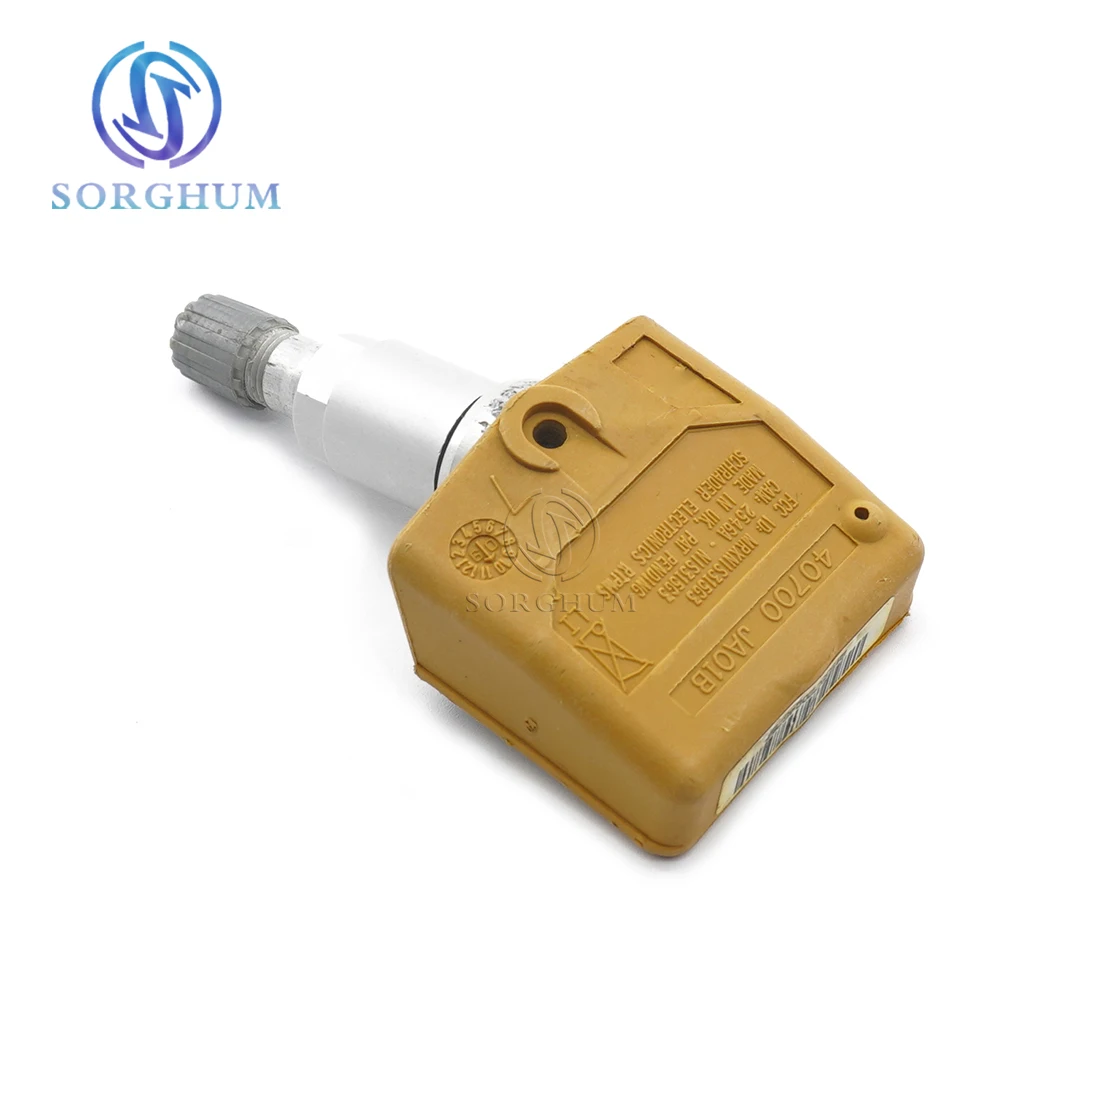 

Sorghum 40700-JA01B 40700JA01B Car TPMS Sensor Tire Pressure Monitoring System For Nissan Altima Maxima For Infiniti 315 MHz